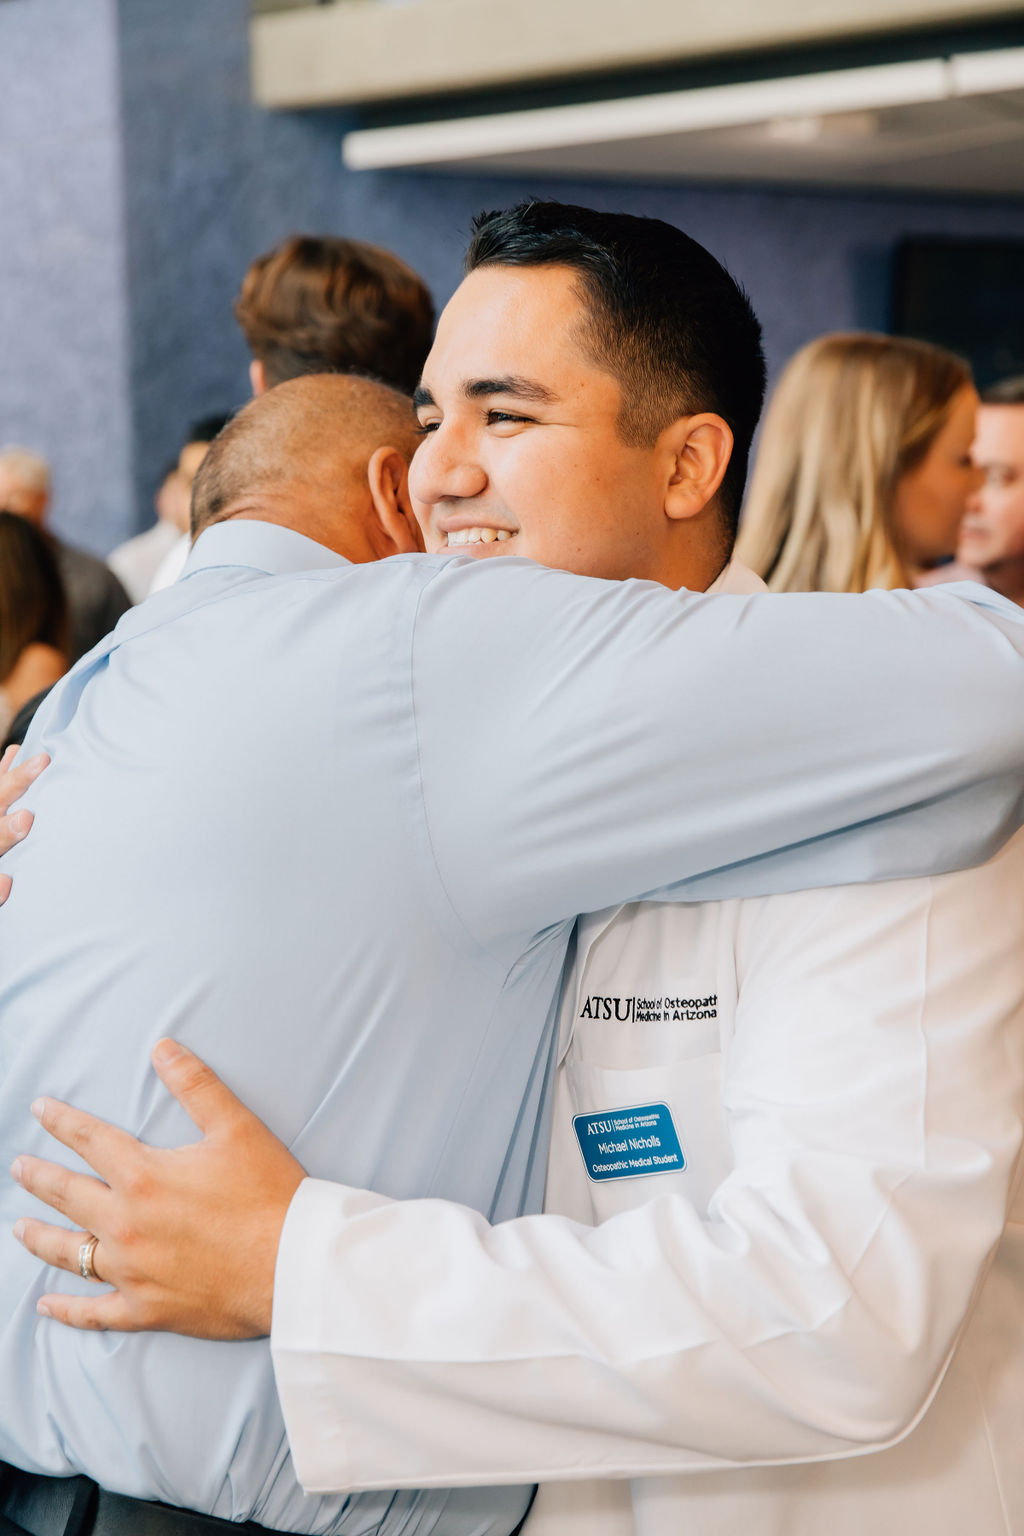 An ATSU-SOMA student embraces someone following the White Coat Ceremony in Mesa, Arizona.